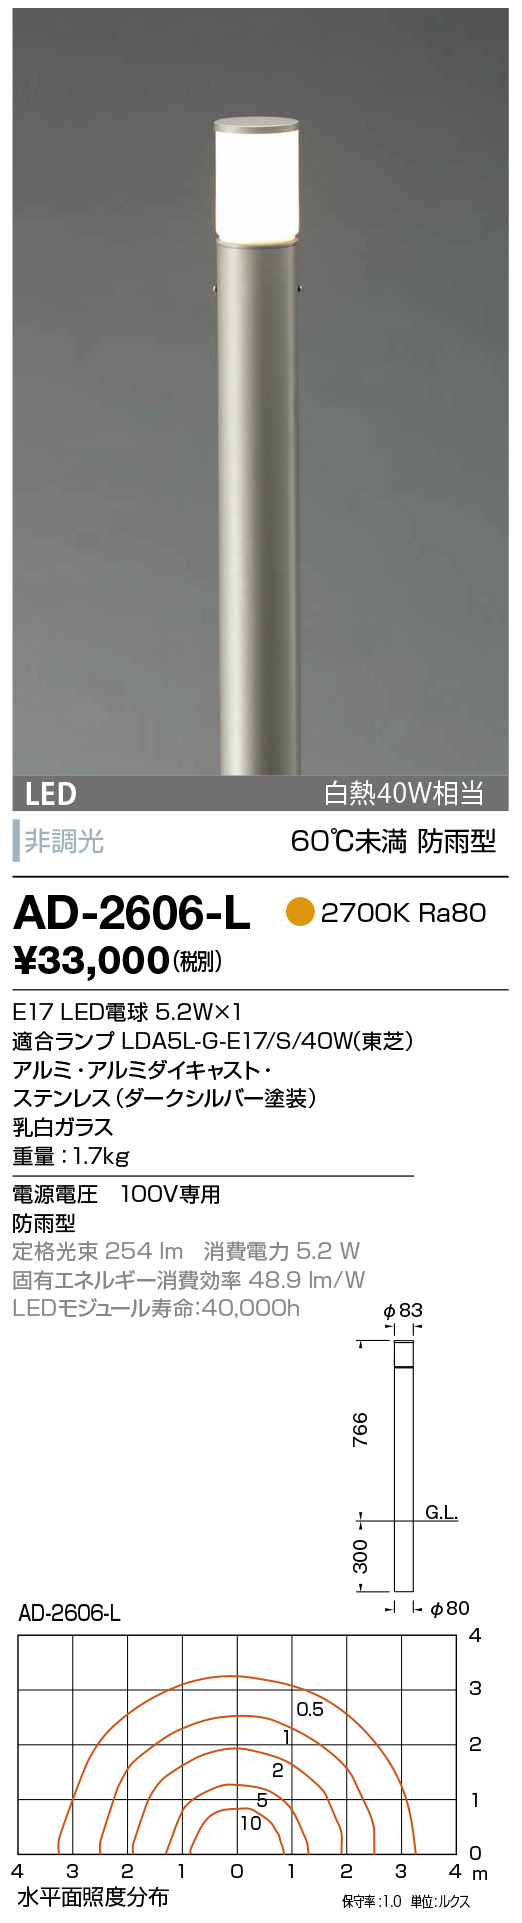 AD-2606-L(山田照明) 商品詳細 ～ 照明器具・換気扇他、電設資材販売のブライト